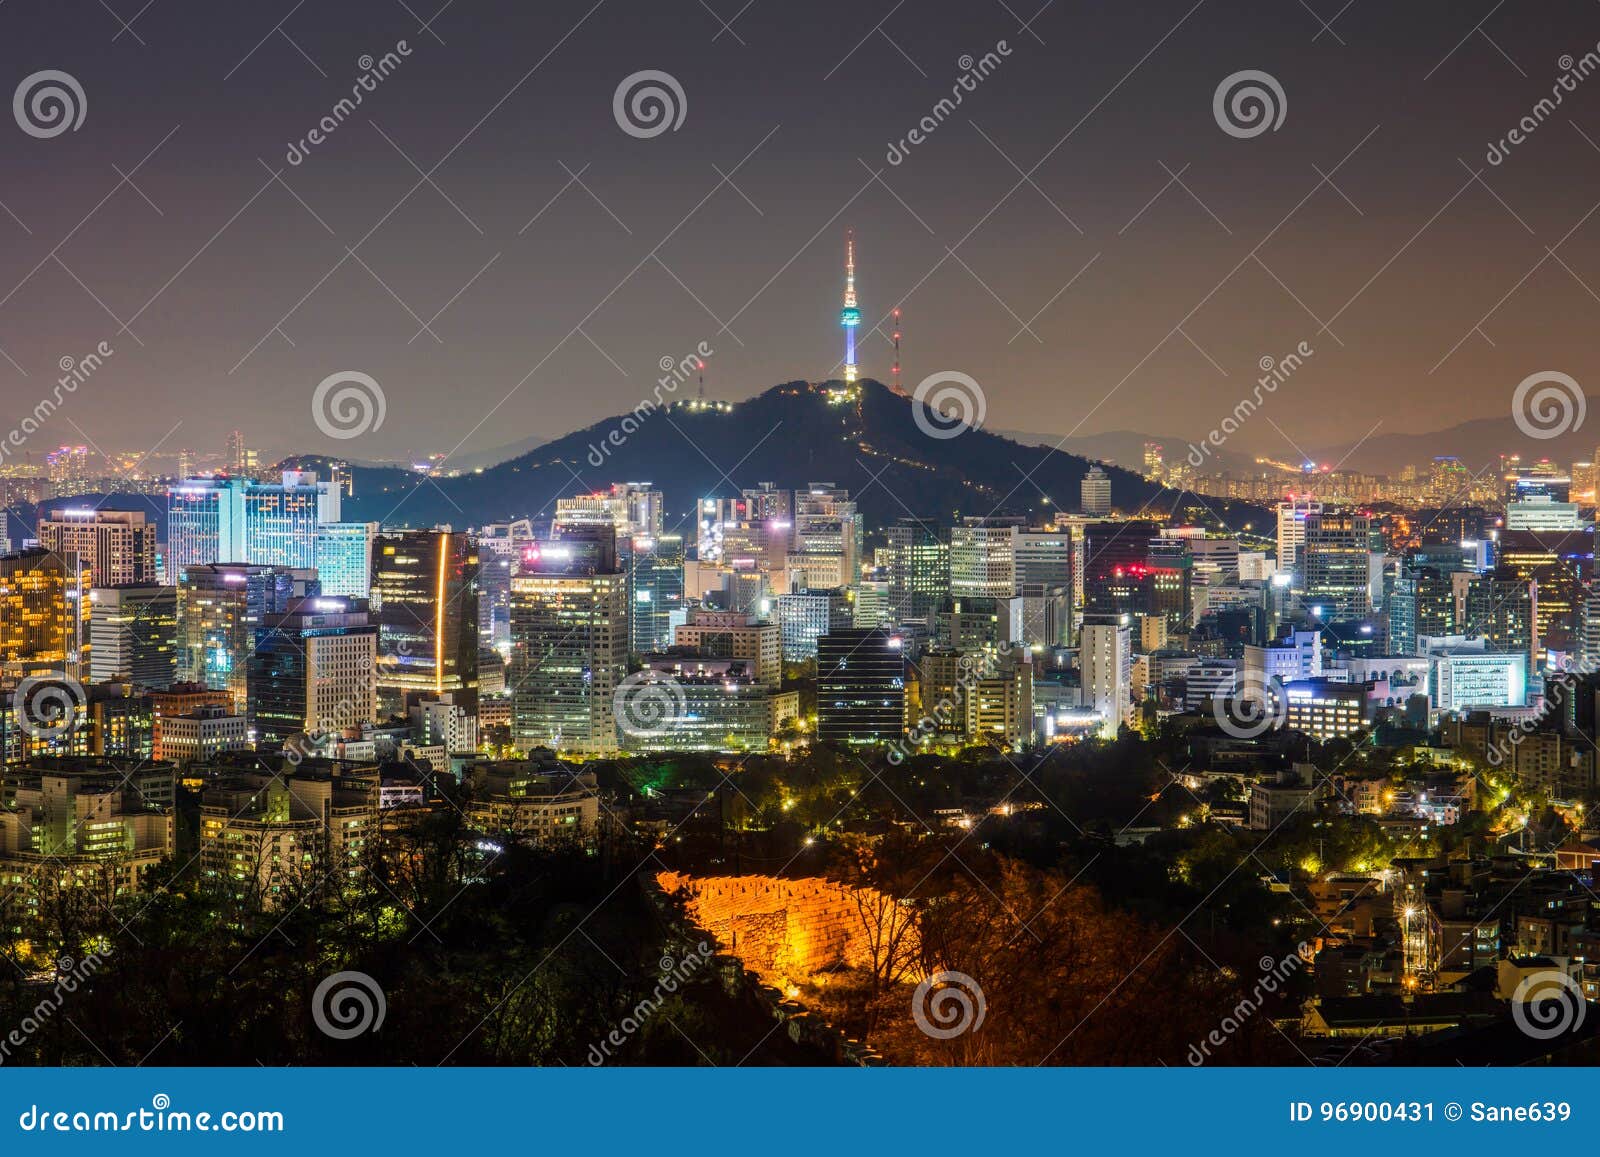 Seoul South Korea City Skyline Stock Image - Image of architecture ...